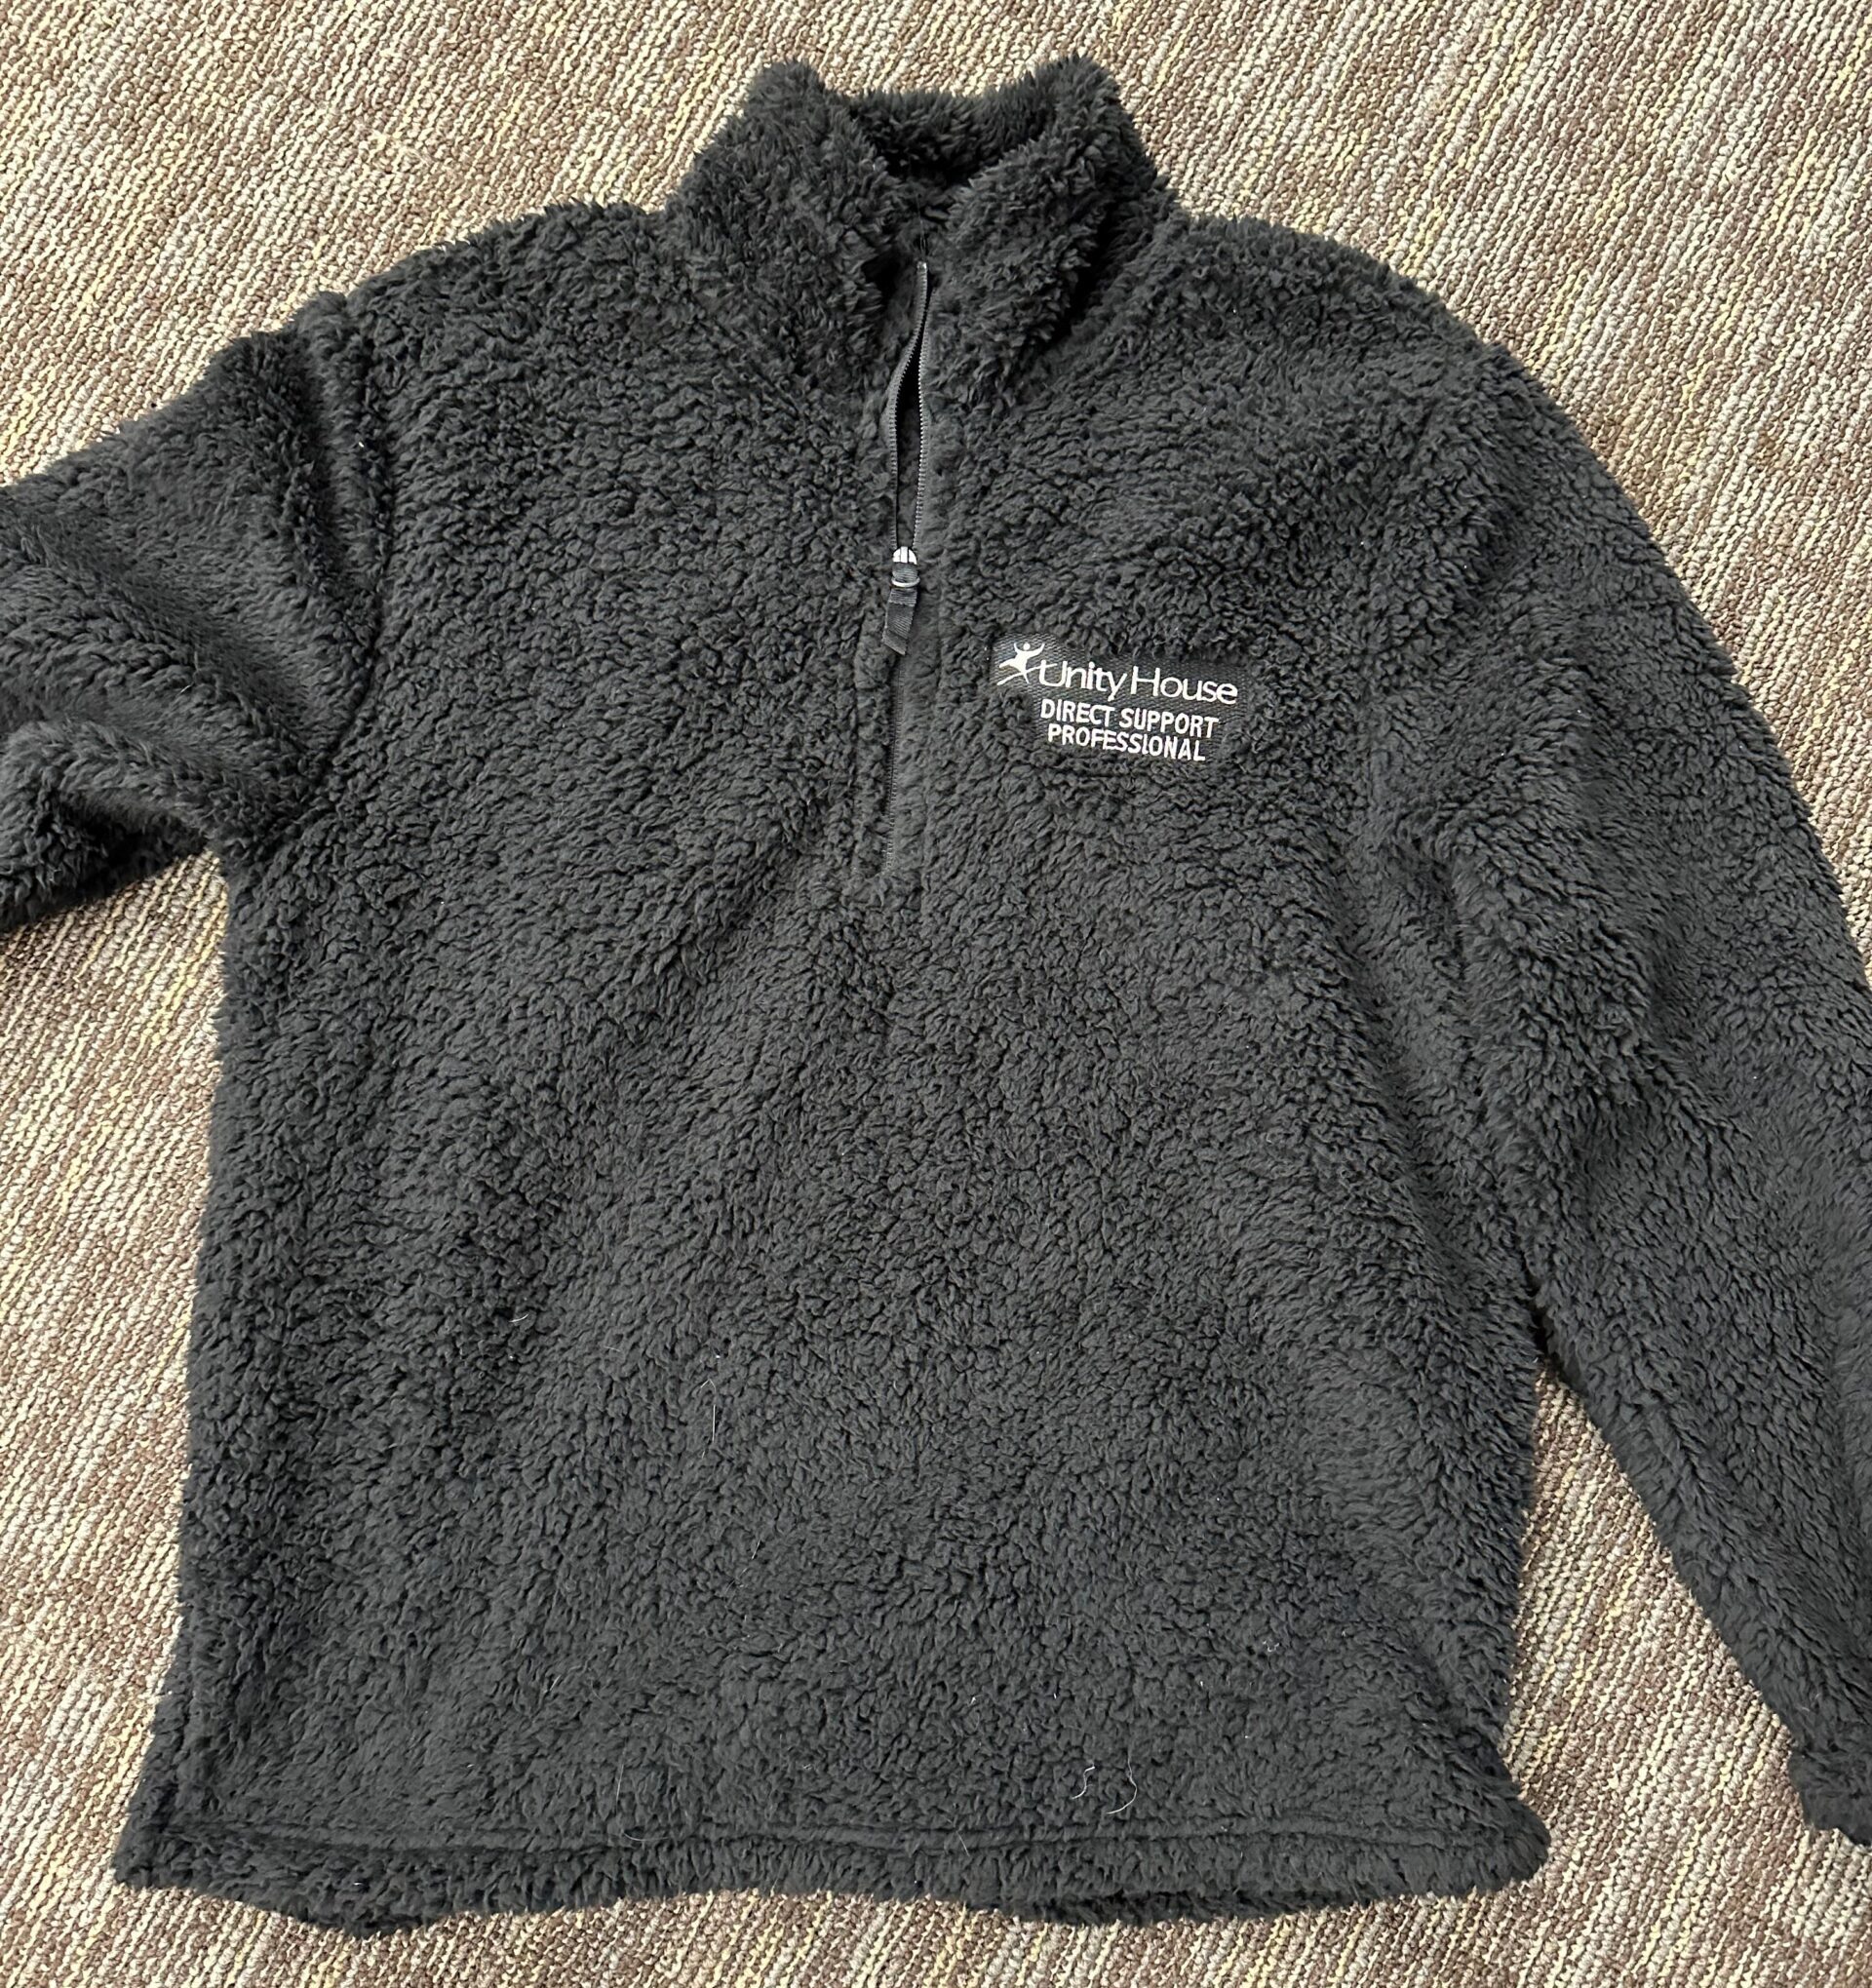 DSP-black-sherpa-pullover-1-scaled-e1708979301189